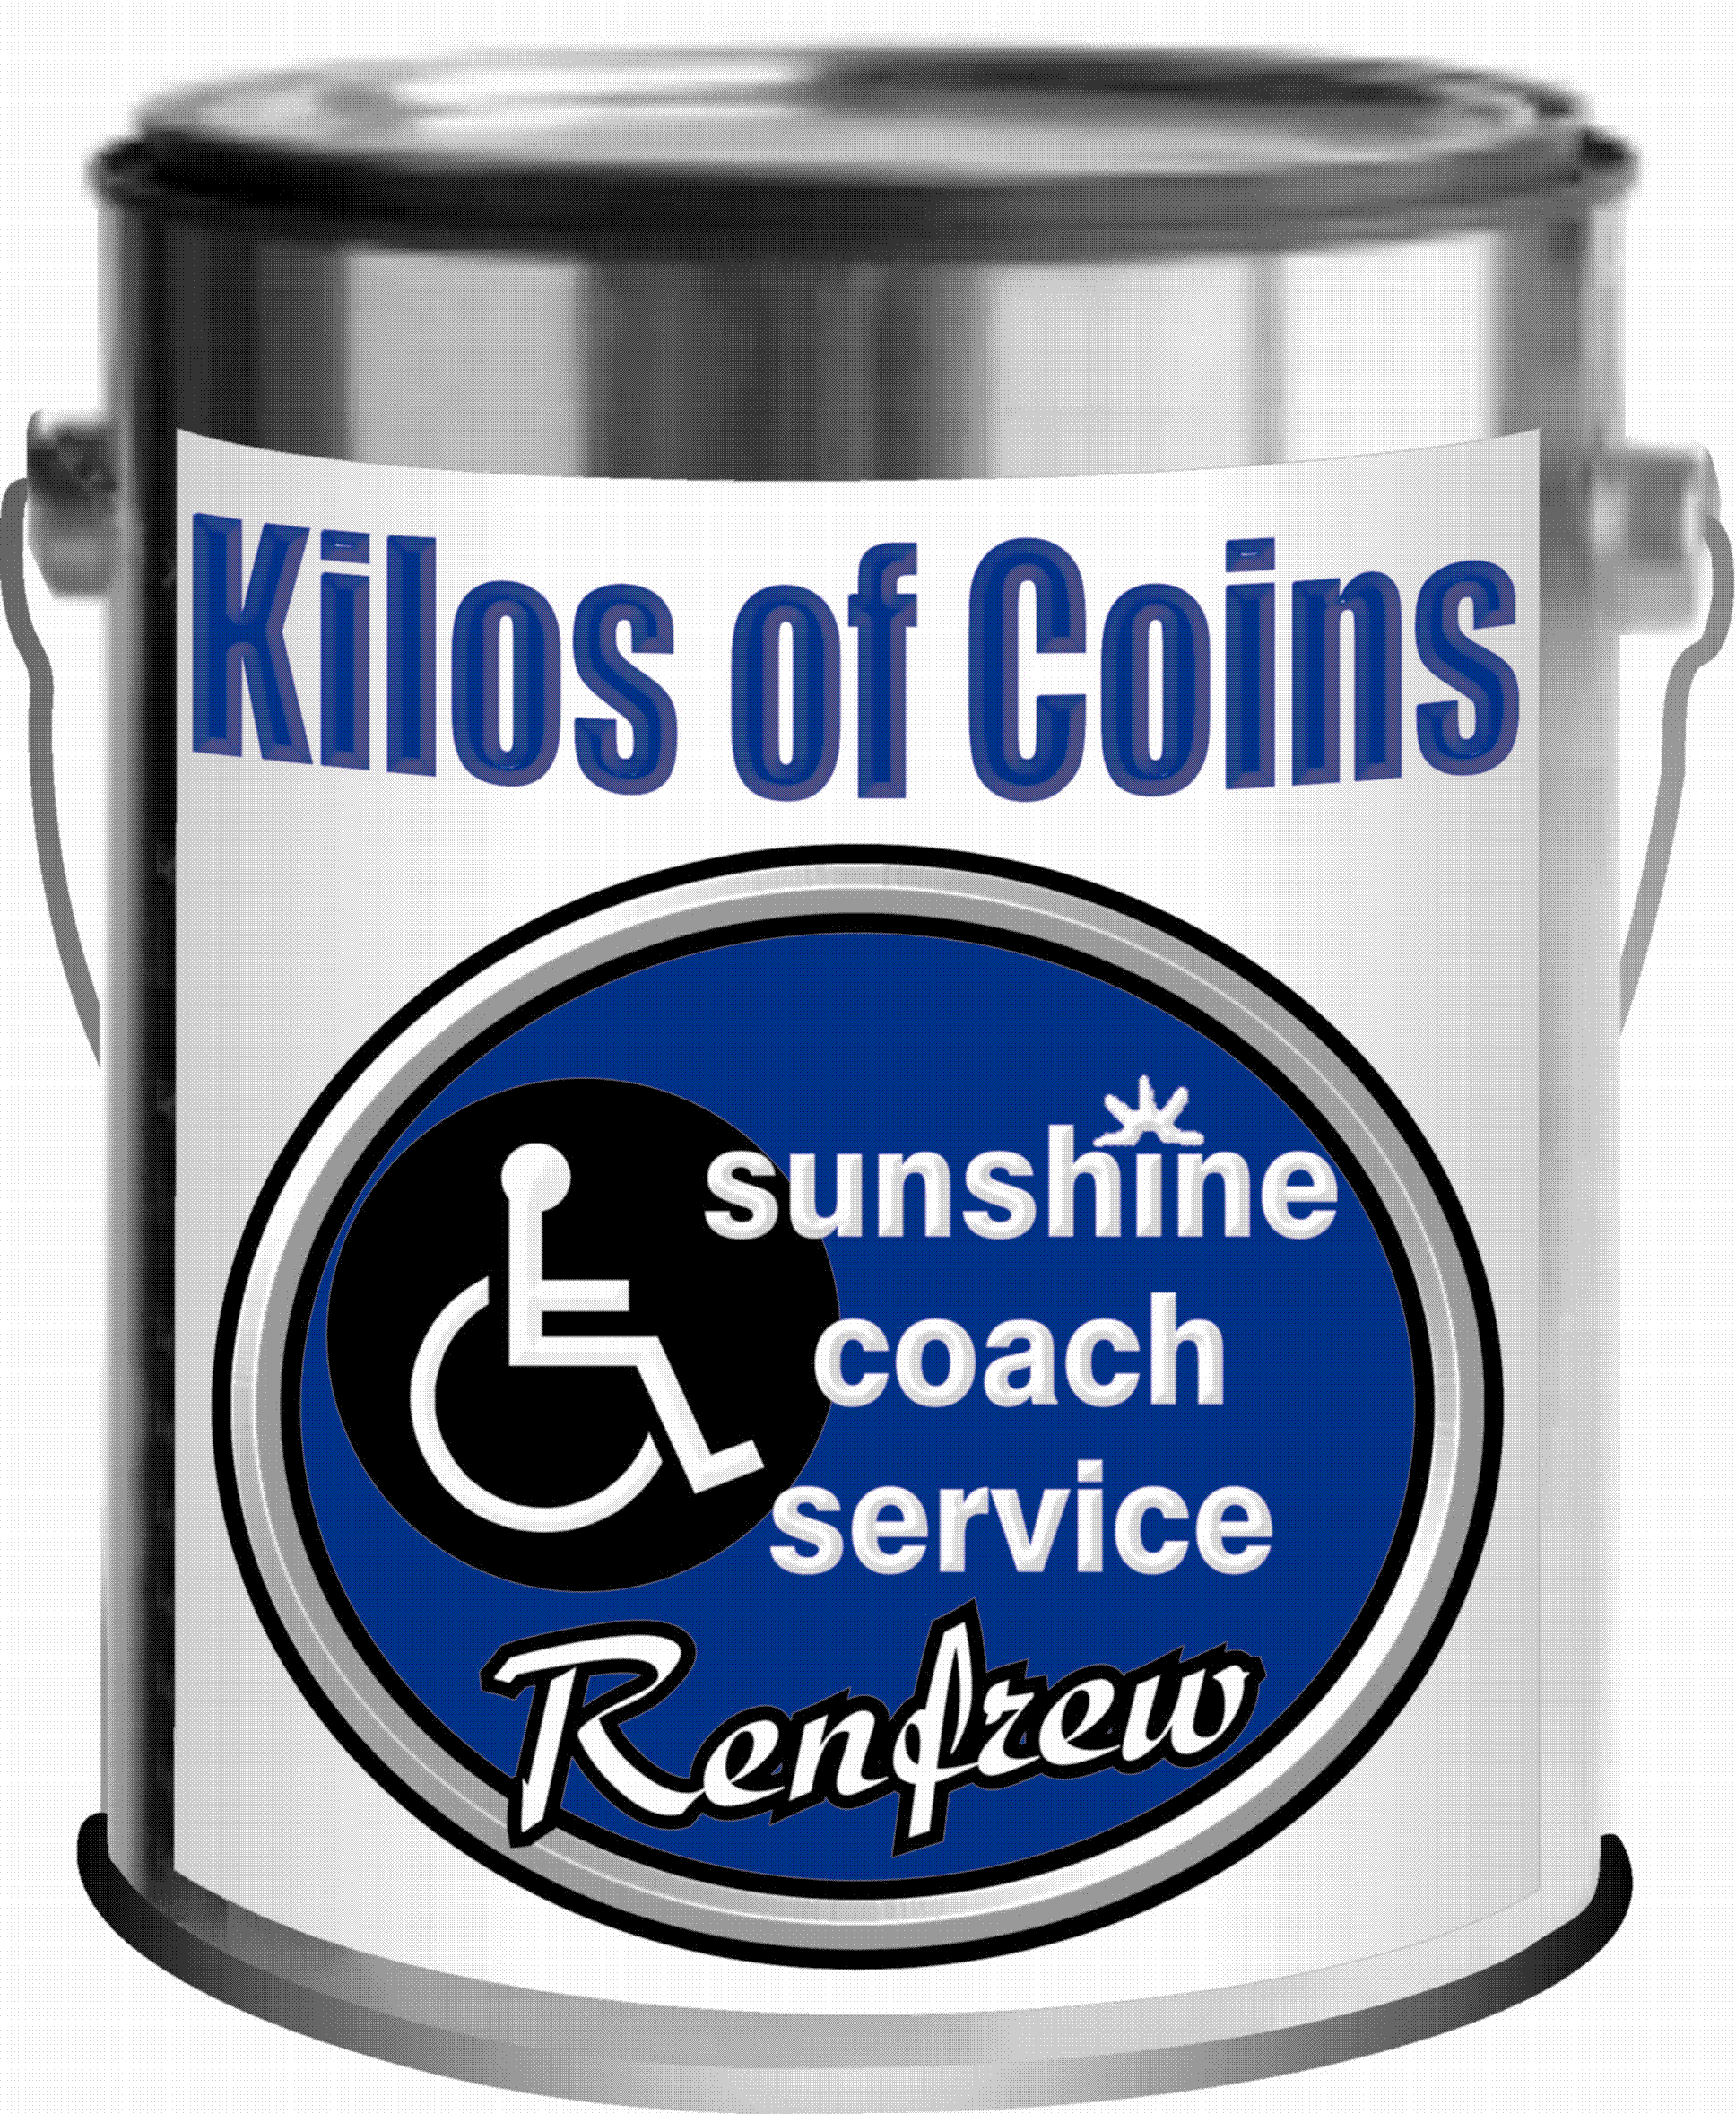 Kilos of Coins Logo